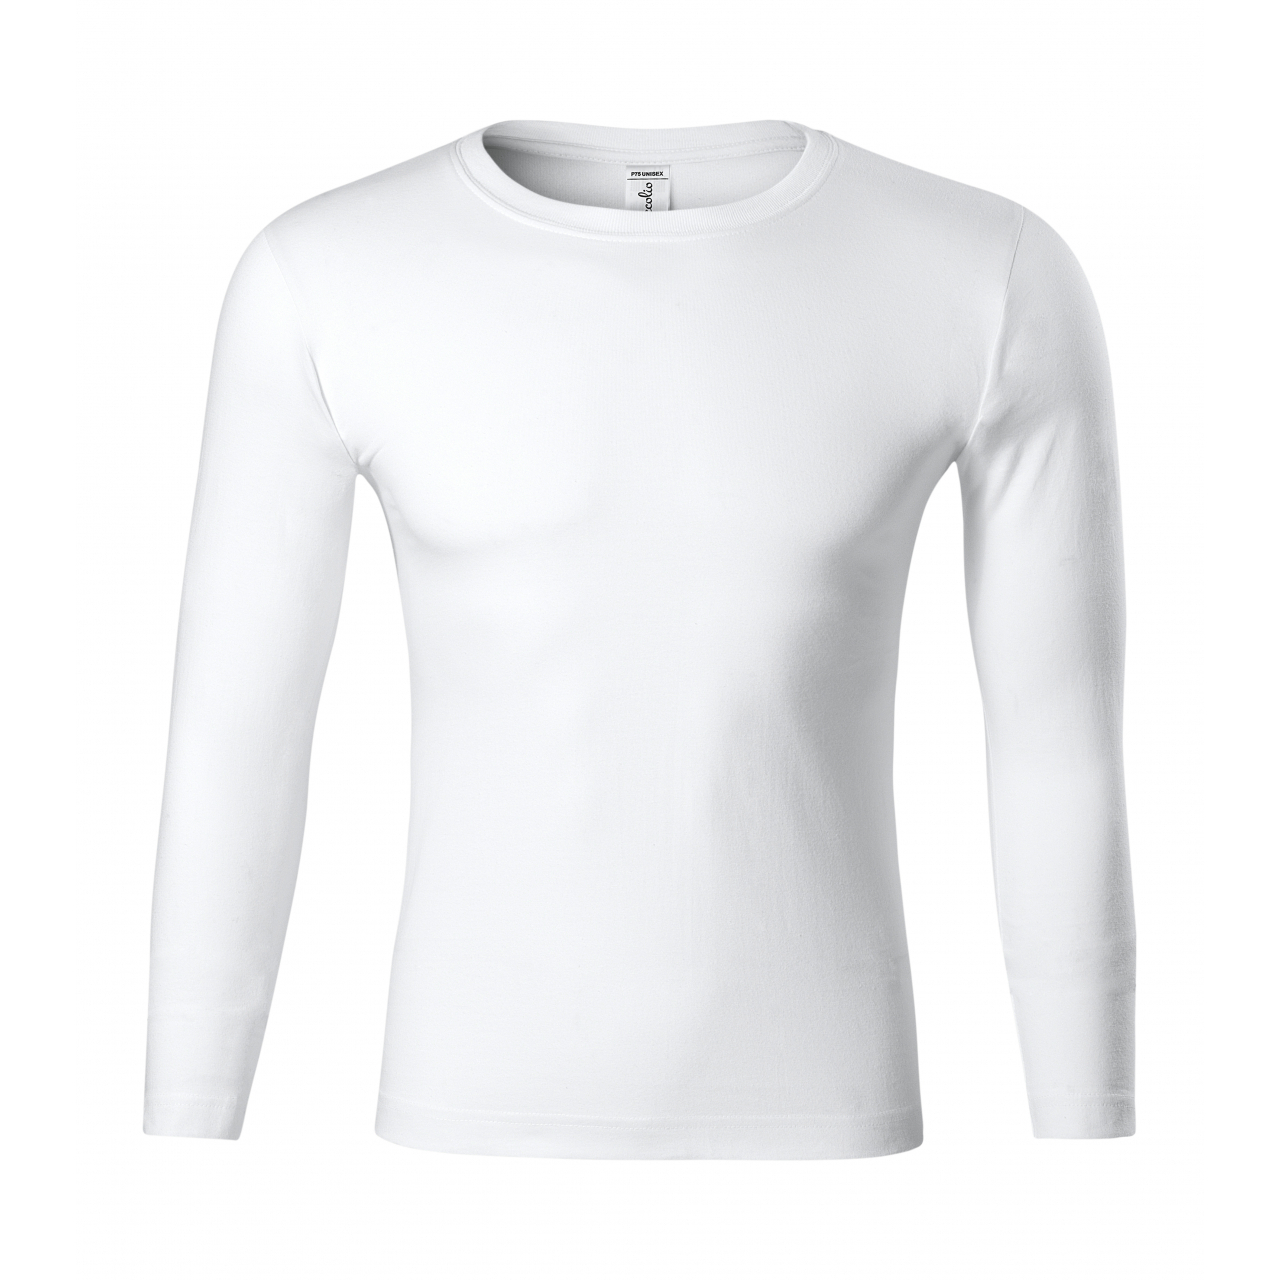 Tričko unisex Piccolio Progress LS - bílé, XL